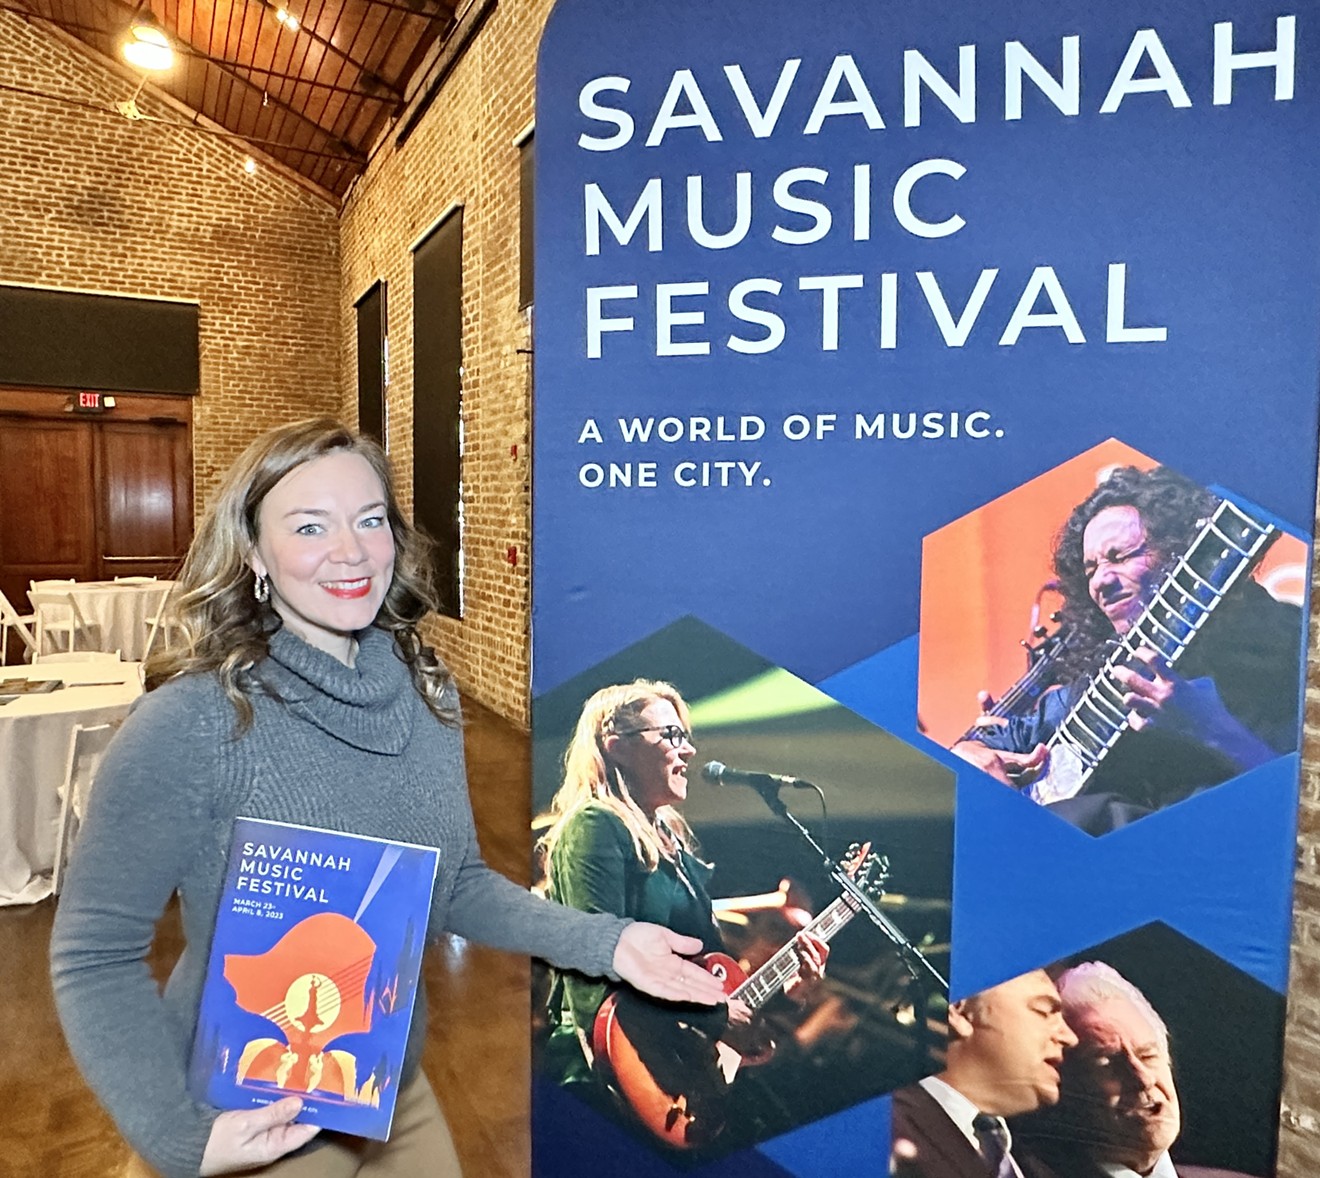 Savannah Downtown Business Association Host Savannah Music Festival Director Gene Dobbs Bradford